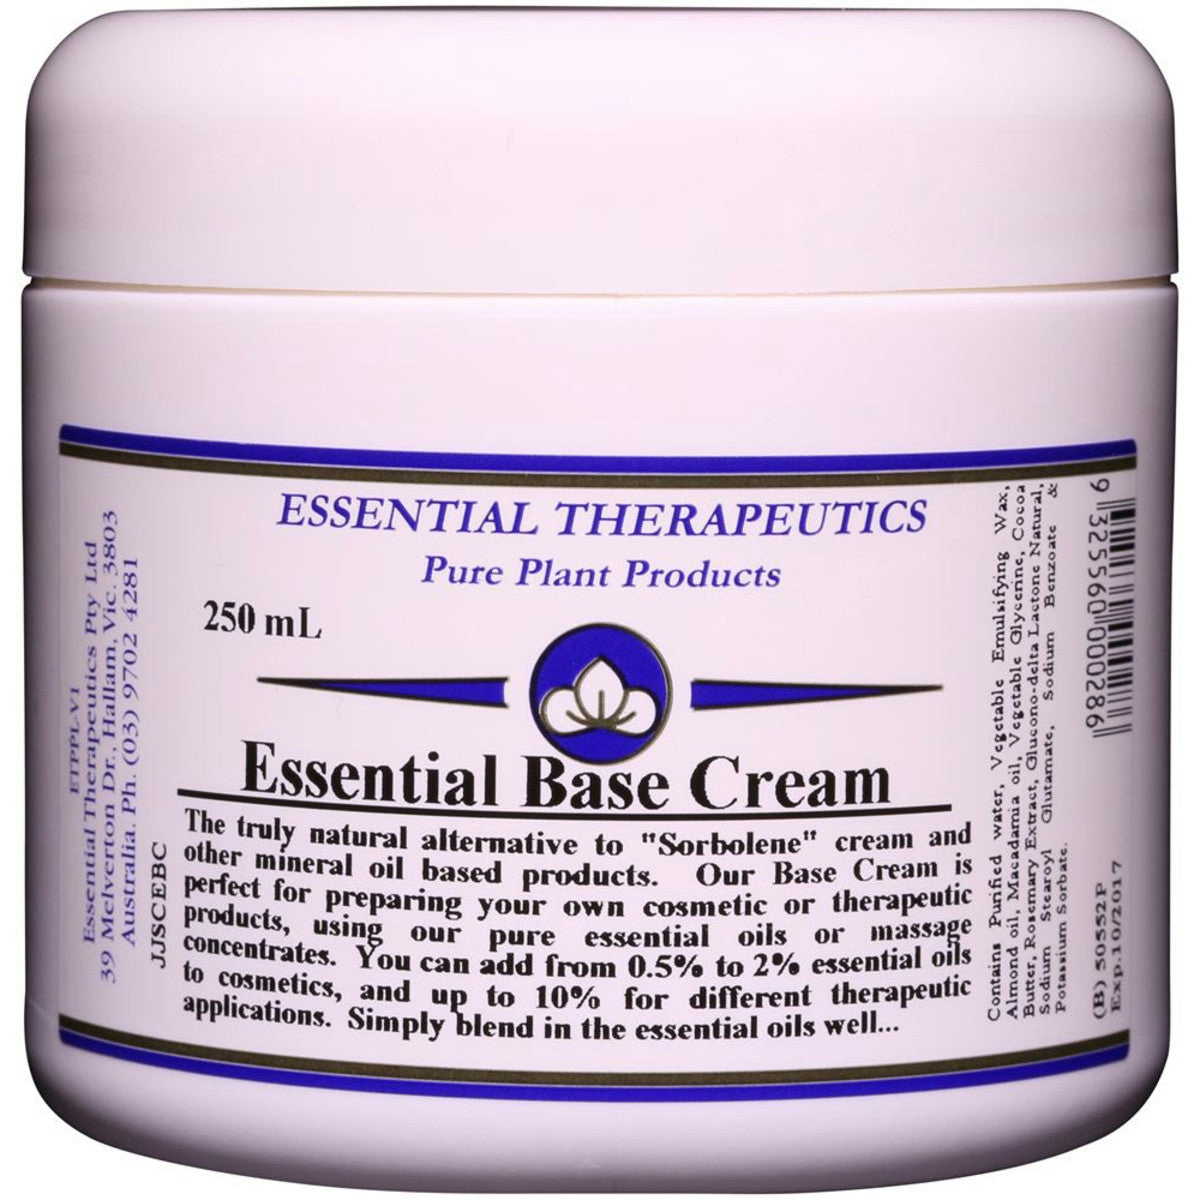 image of Essential Therapeutics Essential Base Cream 250ml on white background